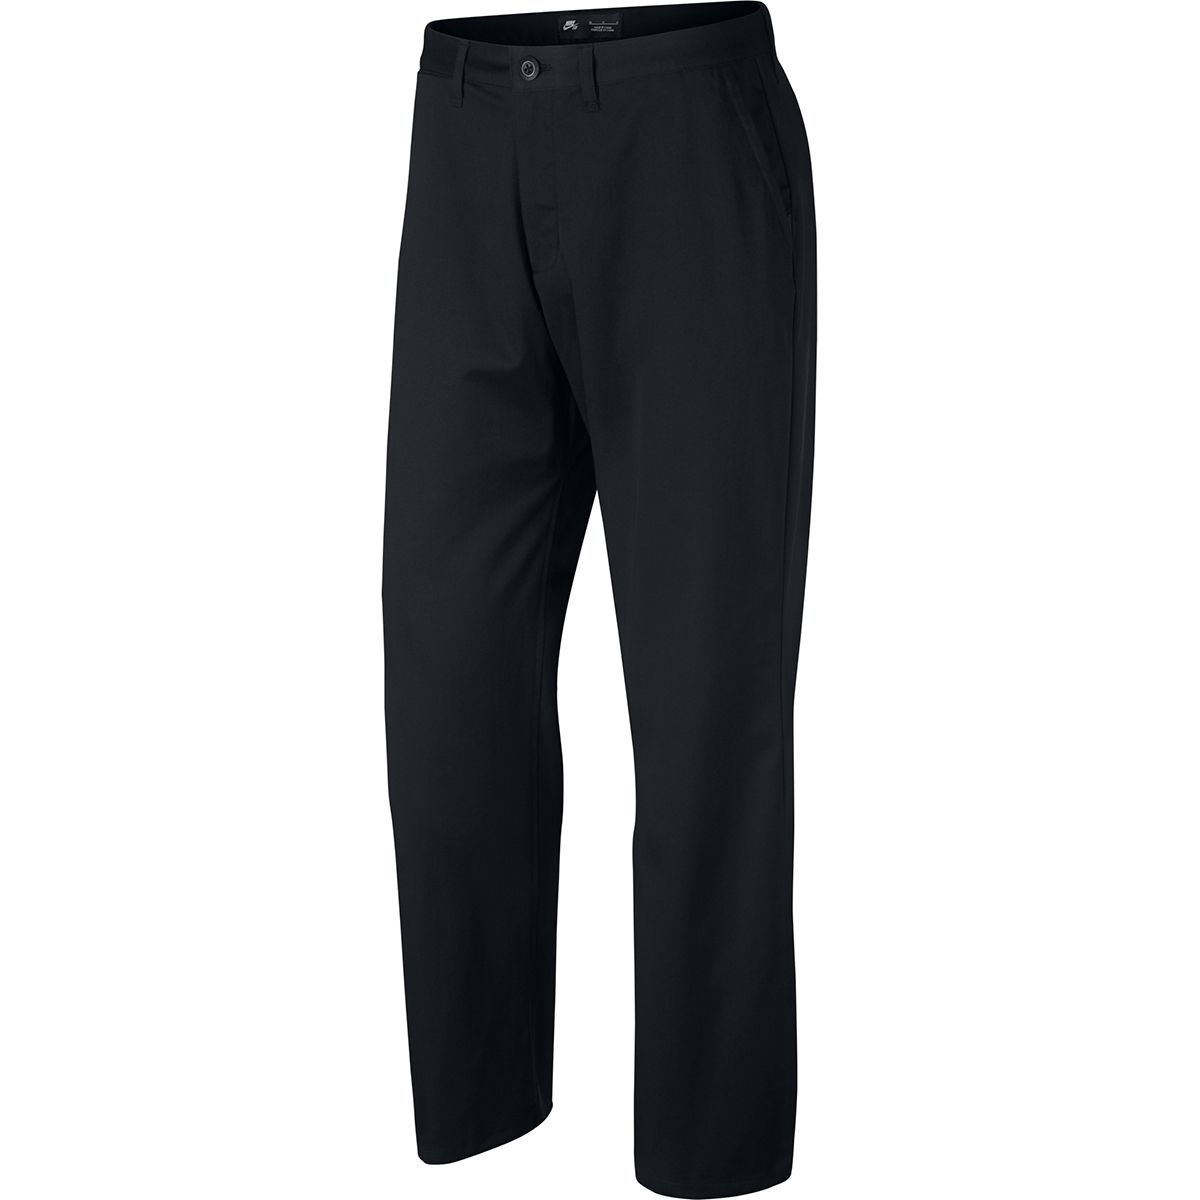 Nike SB Dry FTM Pant - - Clothing